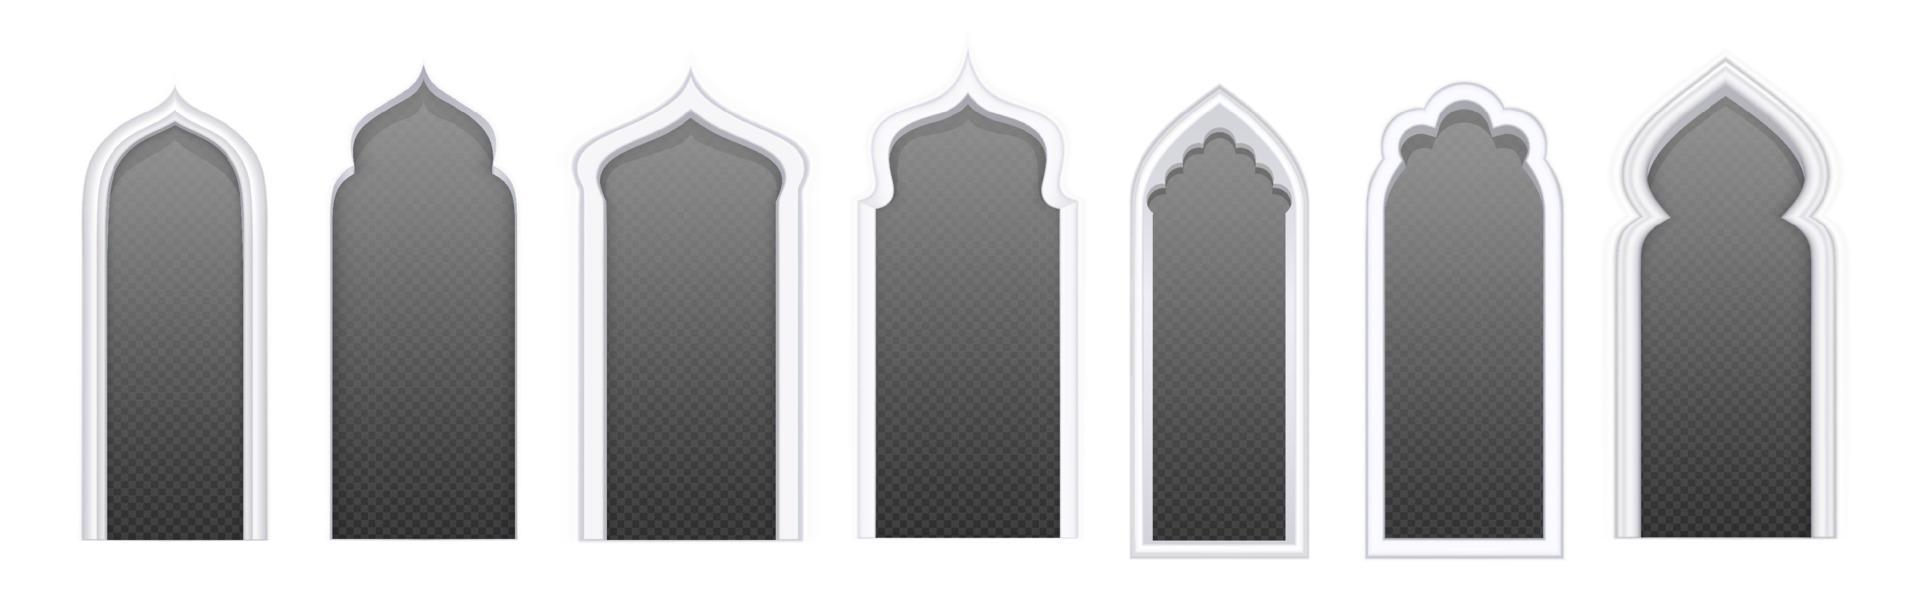 arcos de puertas árabes, arquitectura islámica vector